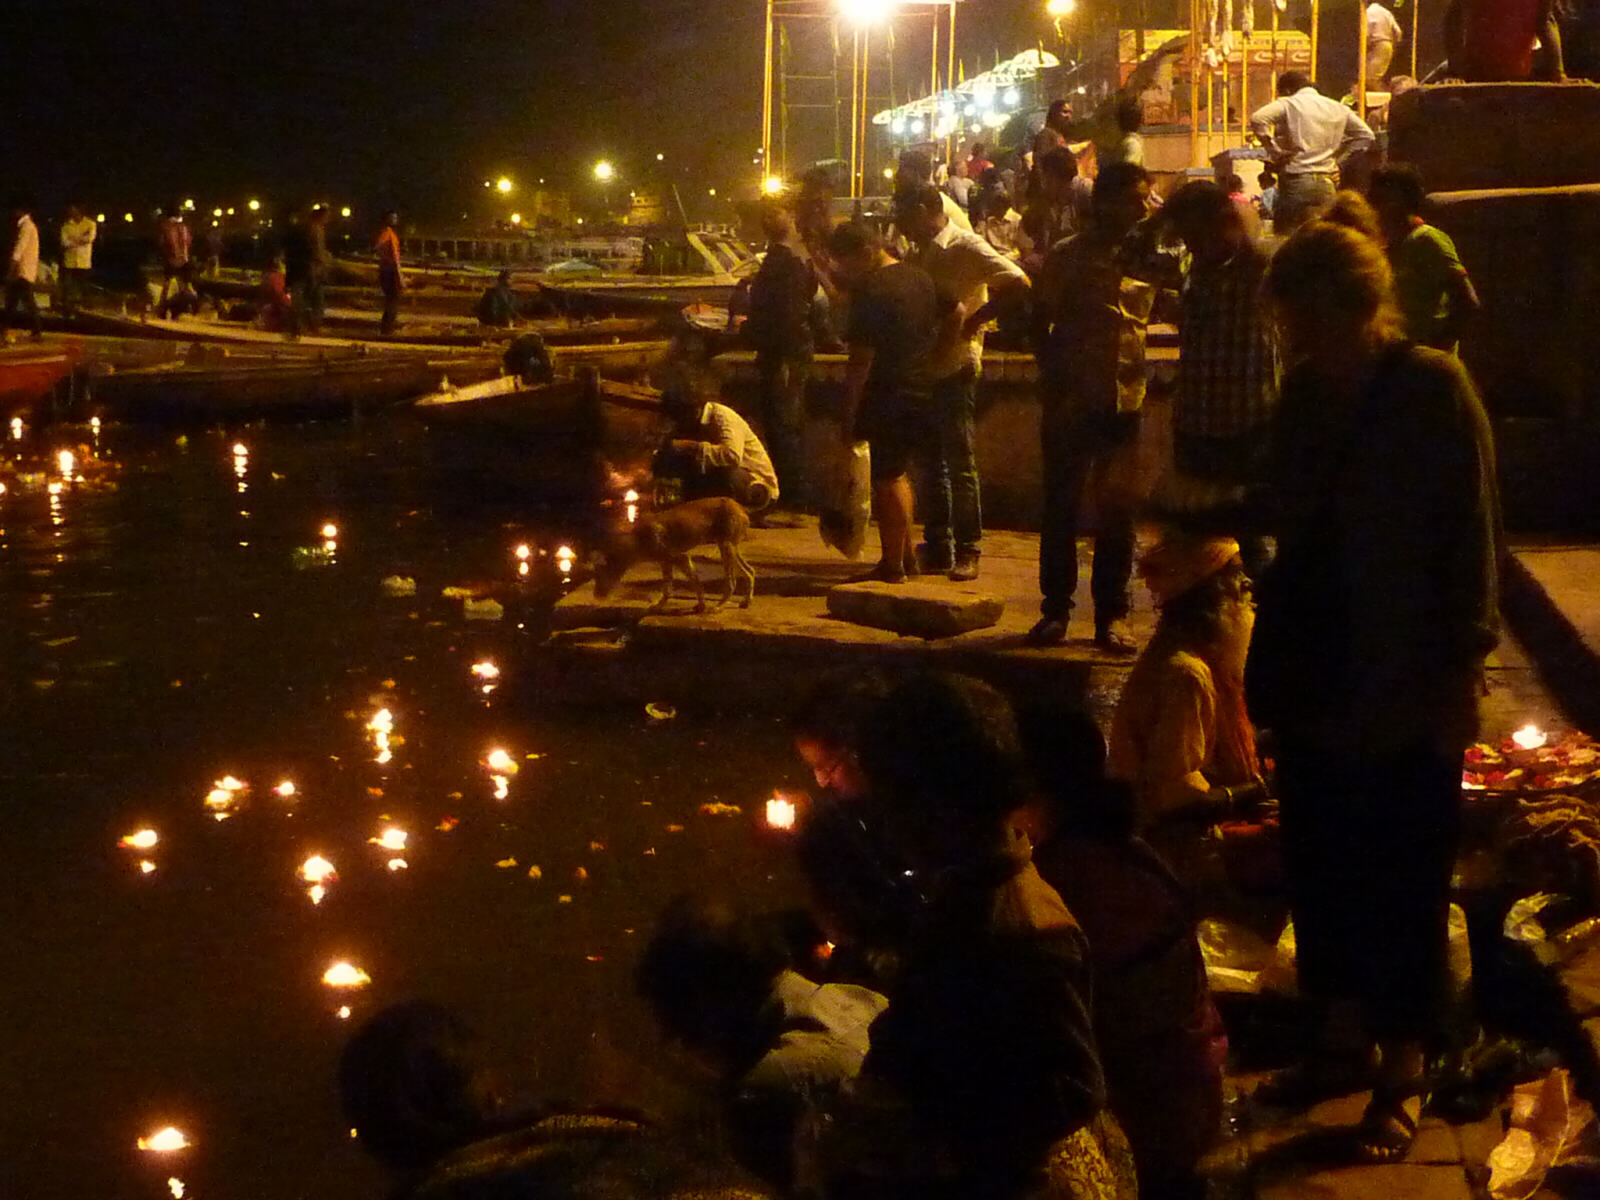 Candles on the river Ganges at Varanasi, India